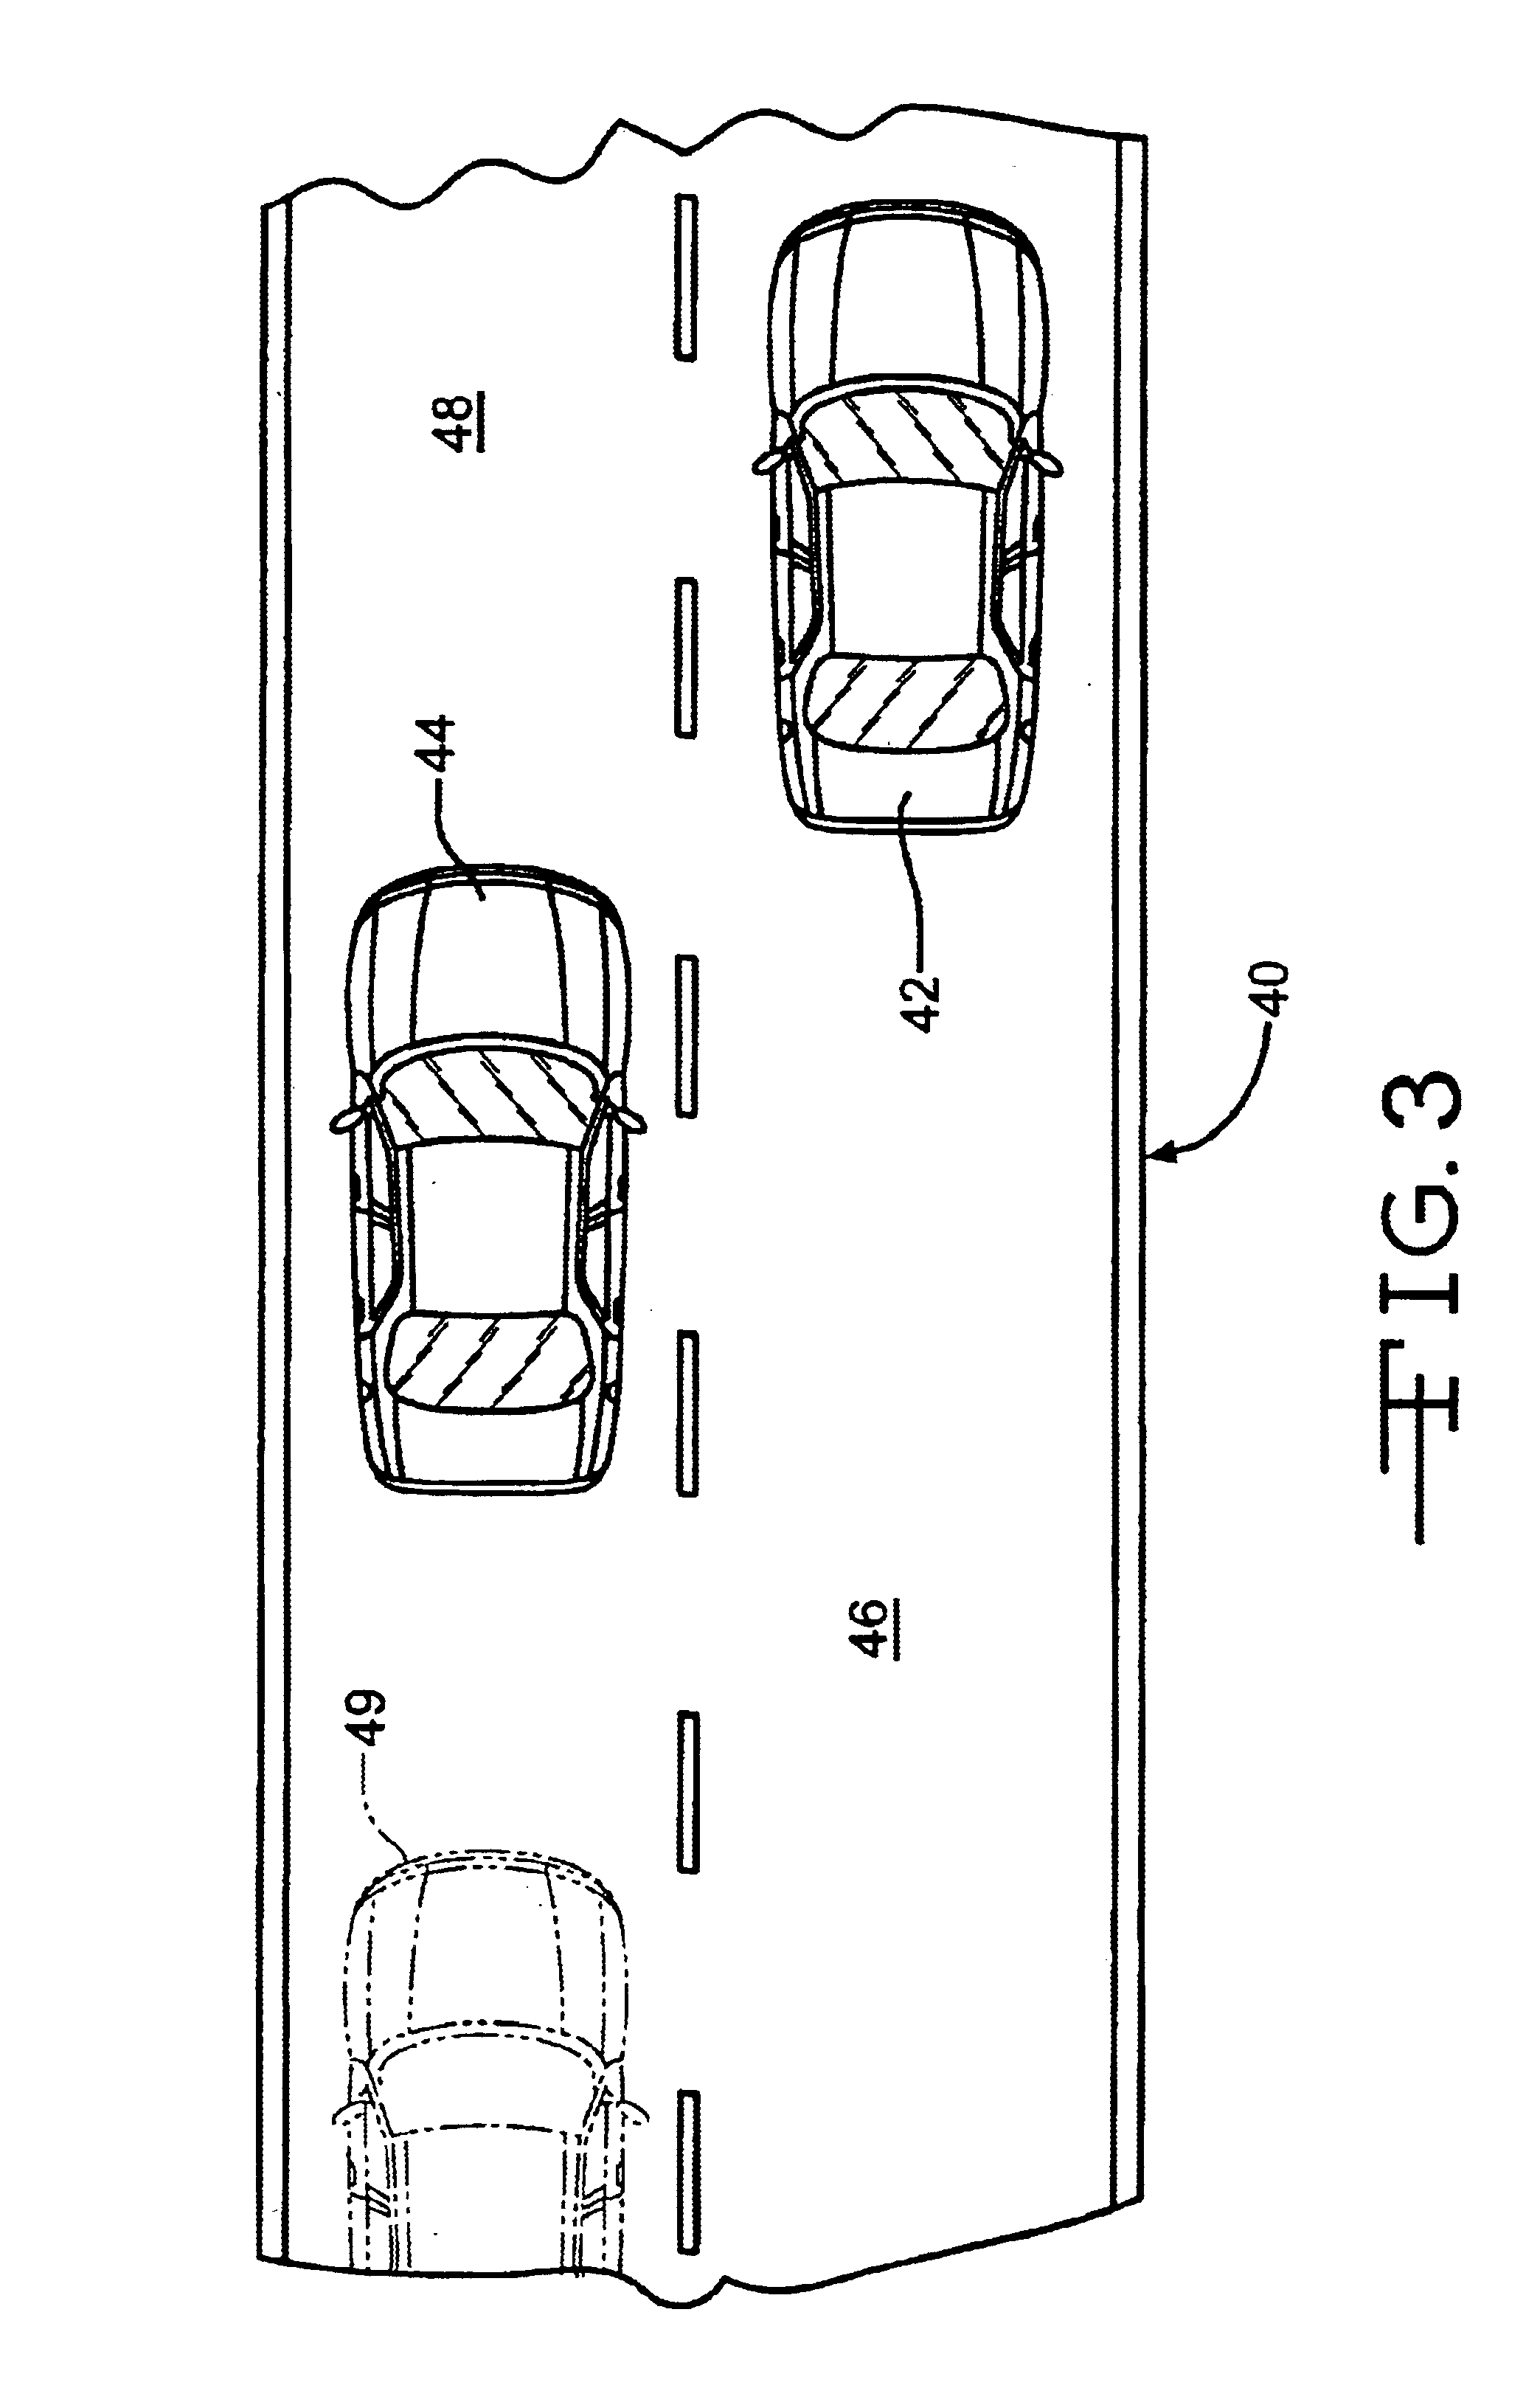 Visual display for vehicle